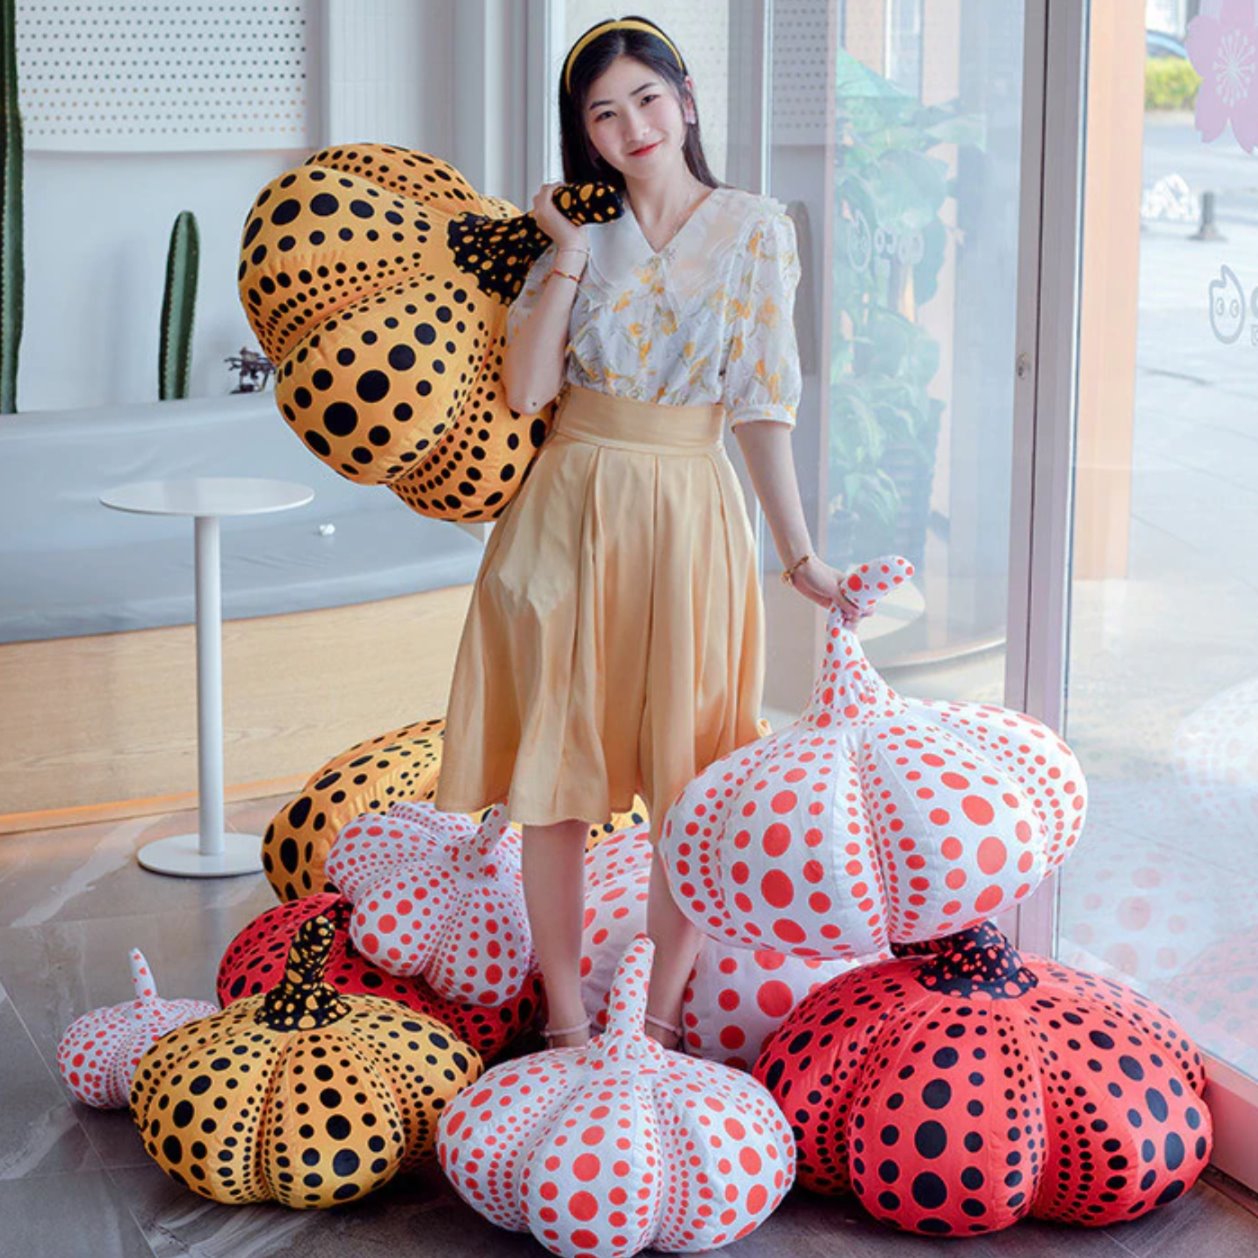 Yayoi Kusama soft sculpture pumpkin keyring, Accessories